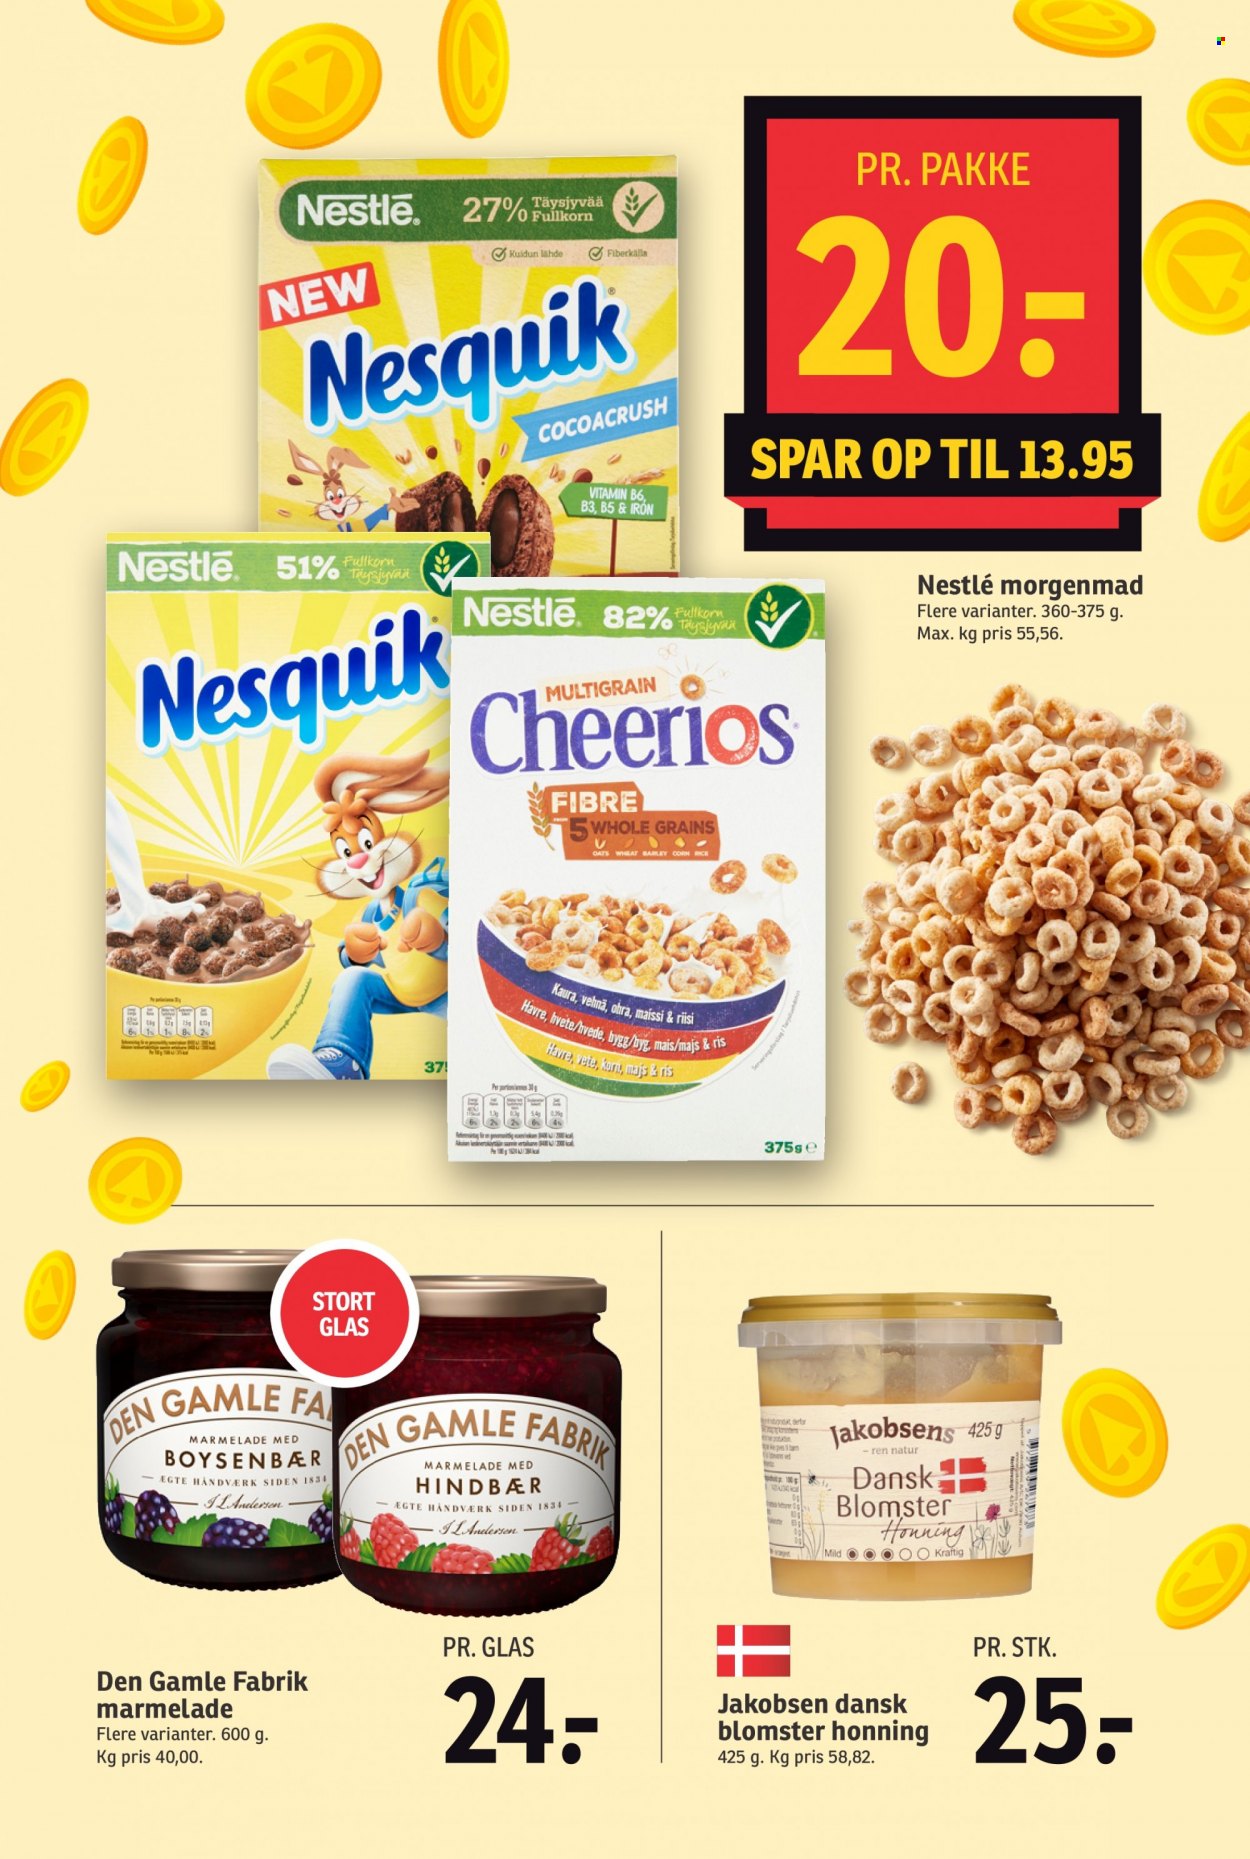 thumbnail - SPAR tilbud  - 21.5.2022 - 27.5.2022 - tilbudsprodukter - majs, Nestlé, cheerios, ris, honning, marmelade, sødt pålæg. Side 13.